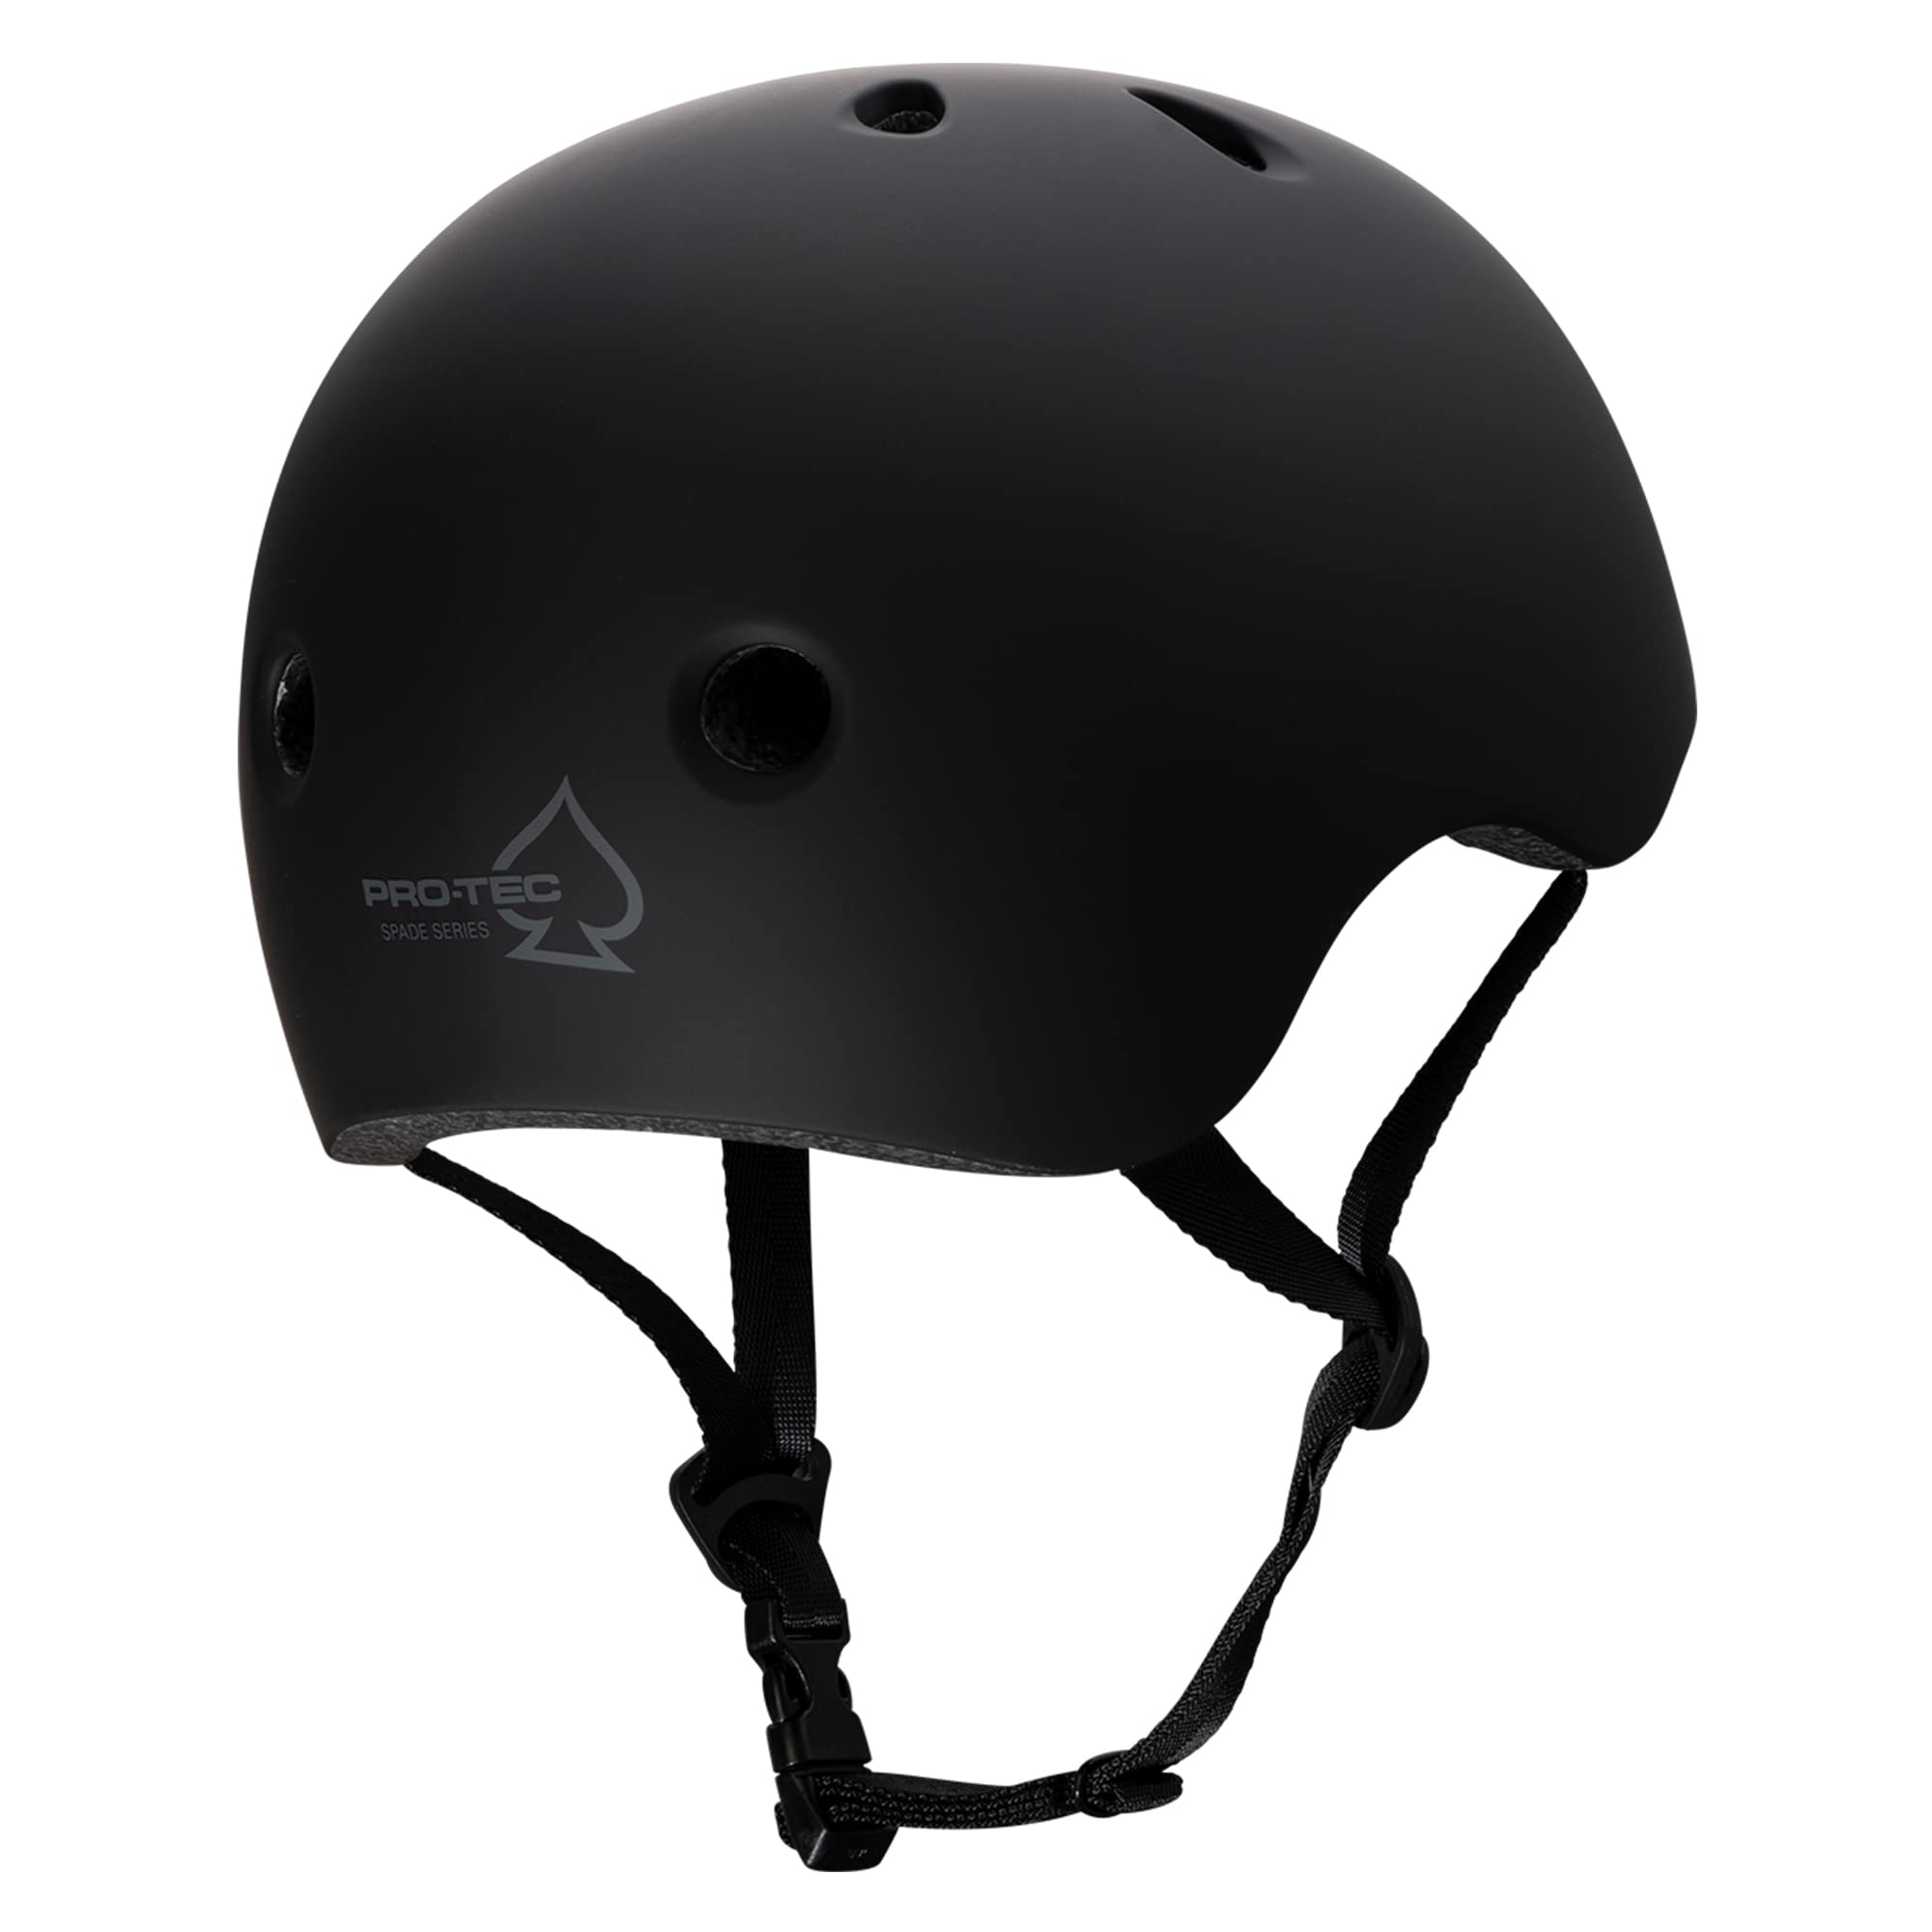 Pro-Tec Spade Series Skate Helmet, Age 8+, Matte Black